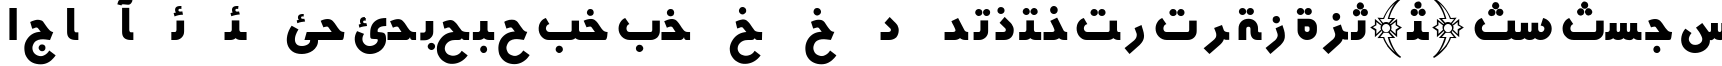 Пример написания английского алфавита шрифтом HMSYekta